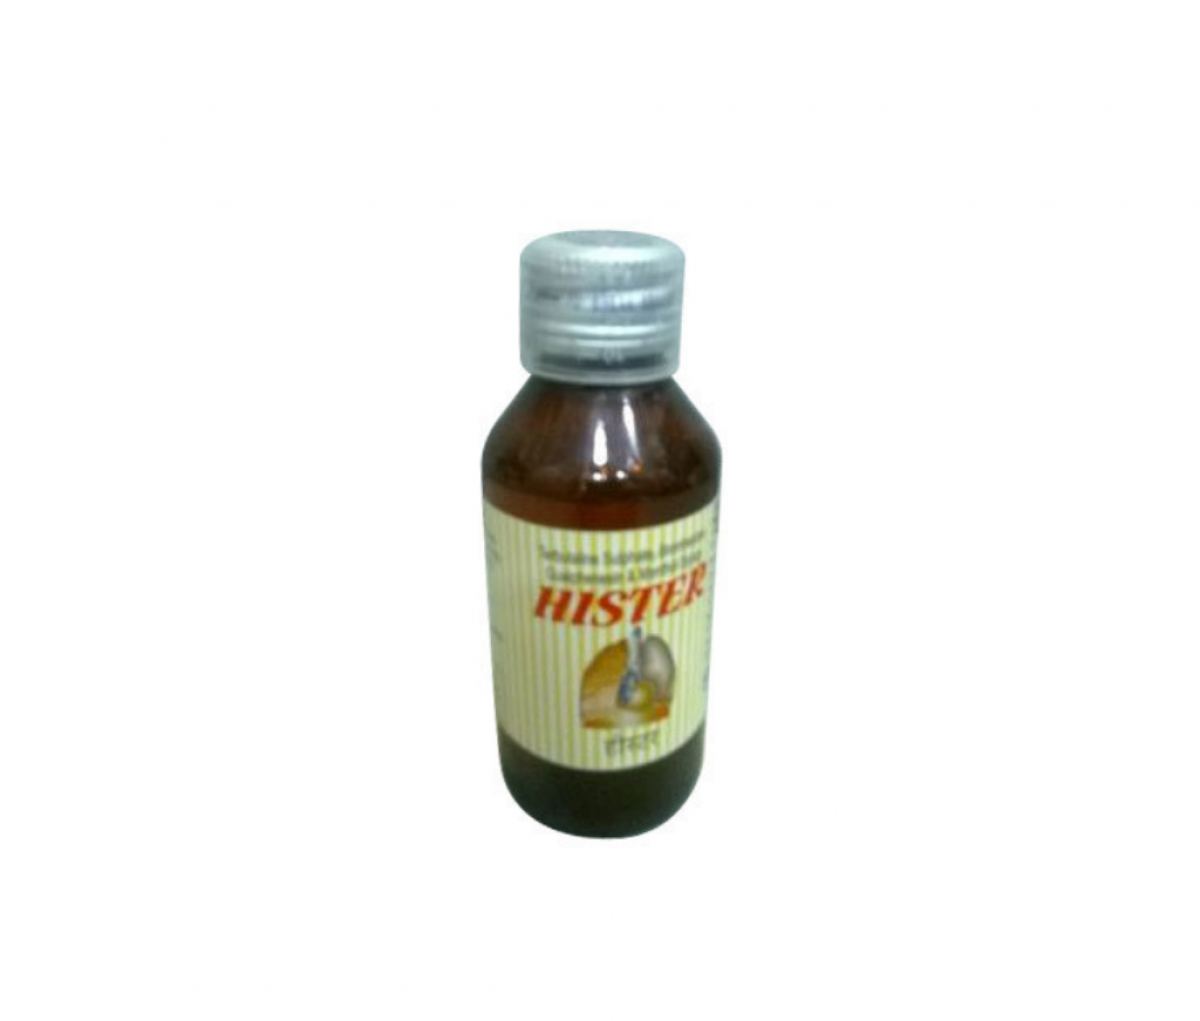 Hister 5mg Oral Liquid